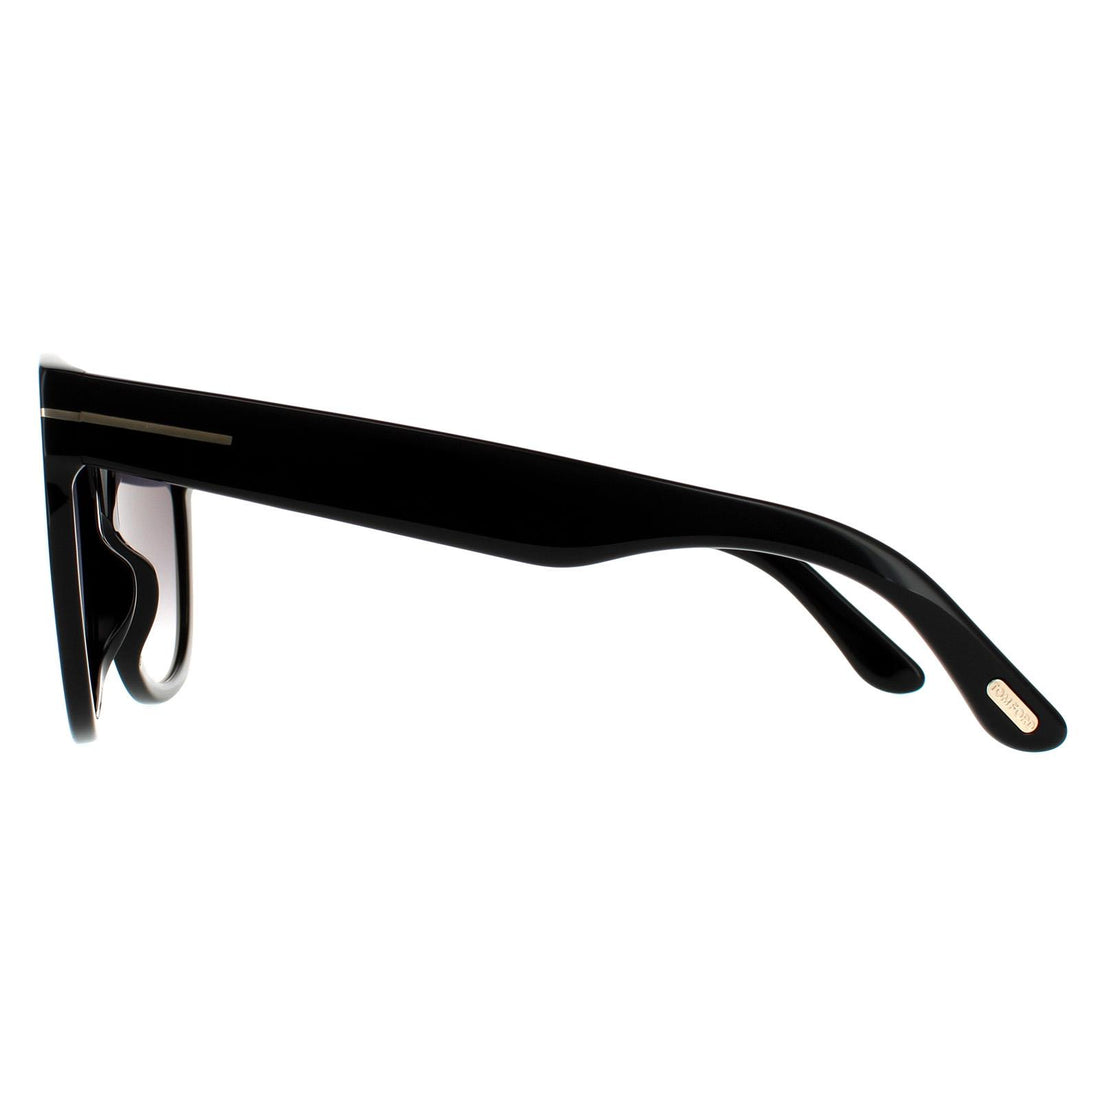 Tom Ford Sunglasses Wallace FT0870 01B Shiny Black Smoke Gradient